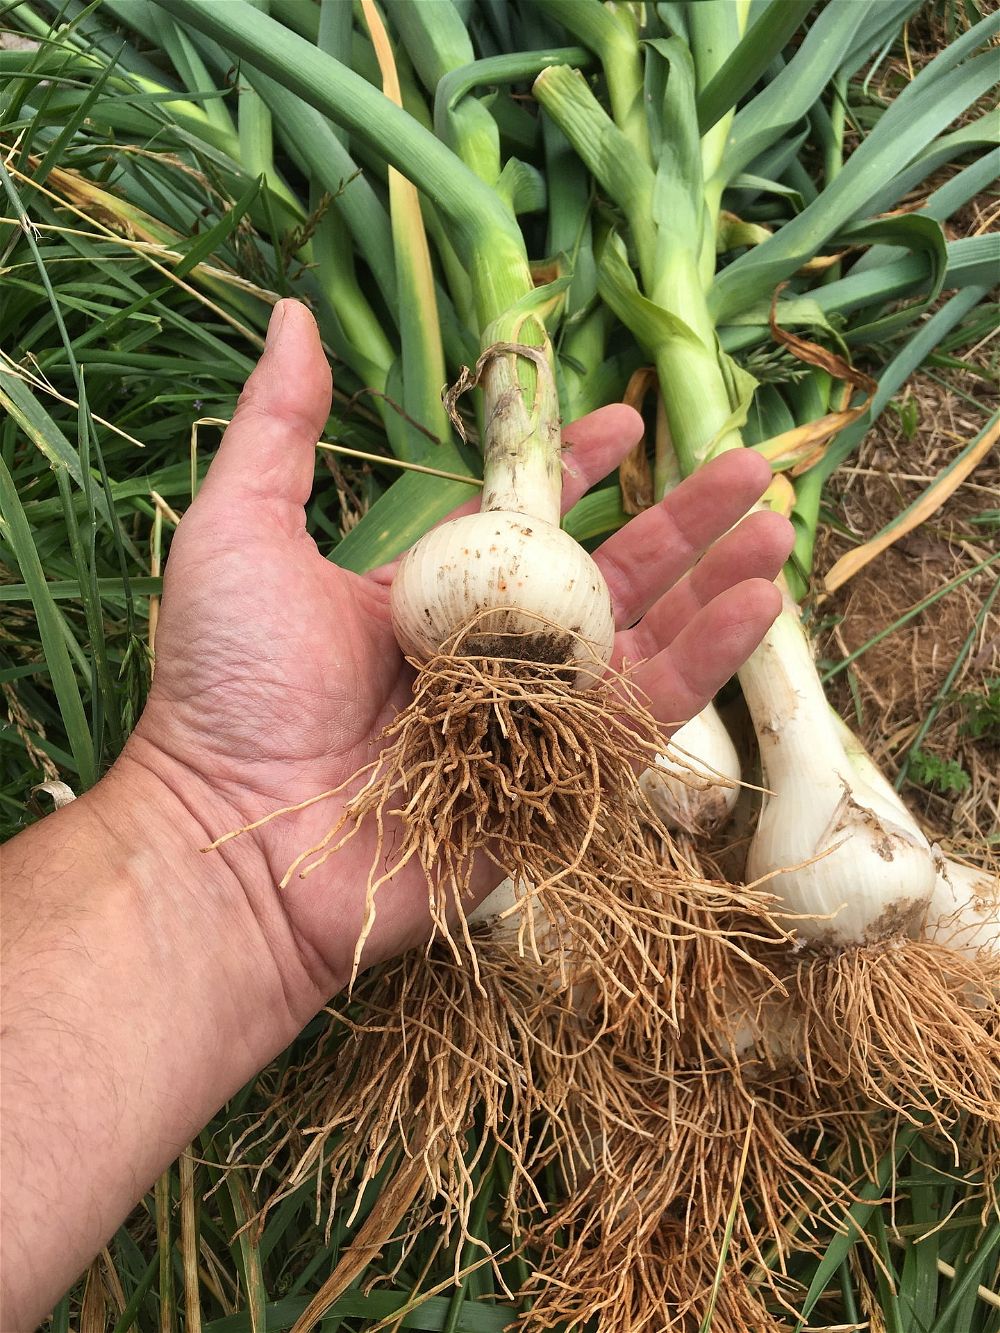 Hand holding harvested garlic bulb